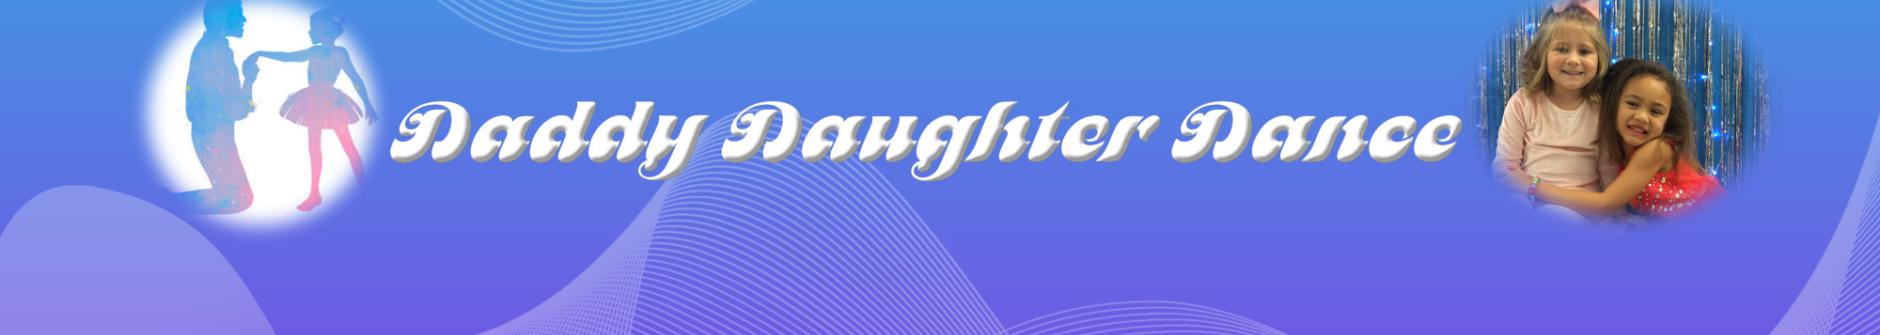 Daddy Daughter Dance Banner